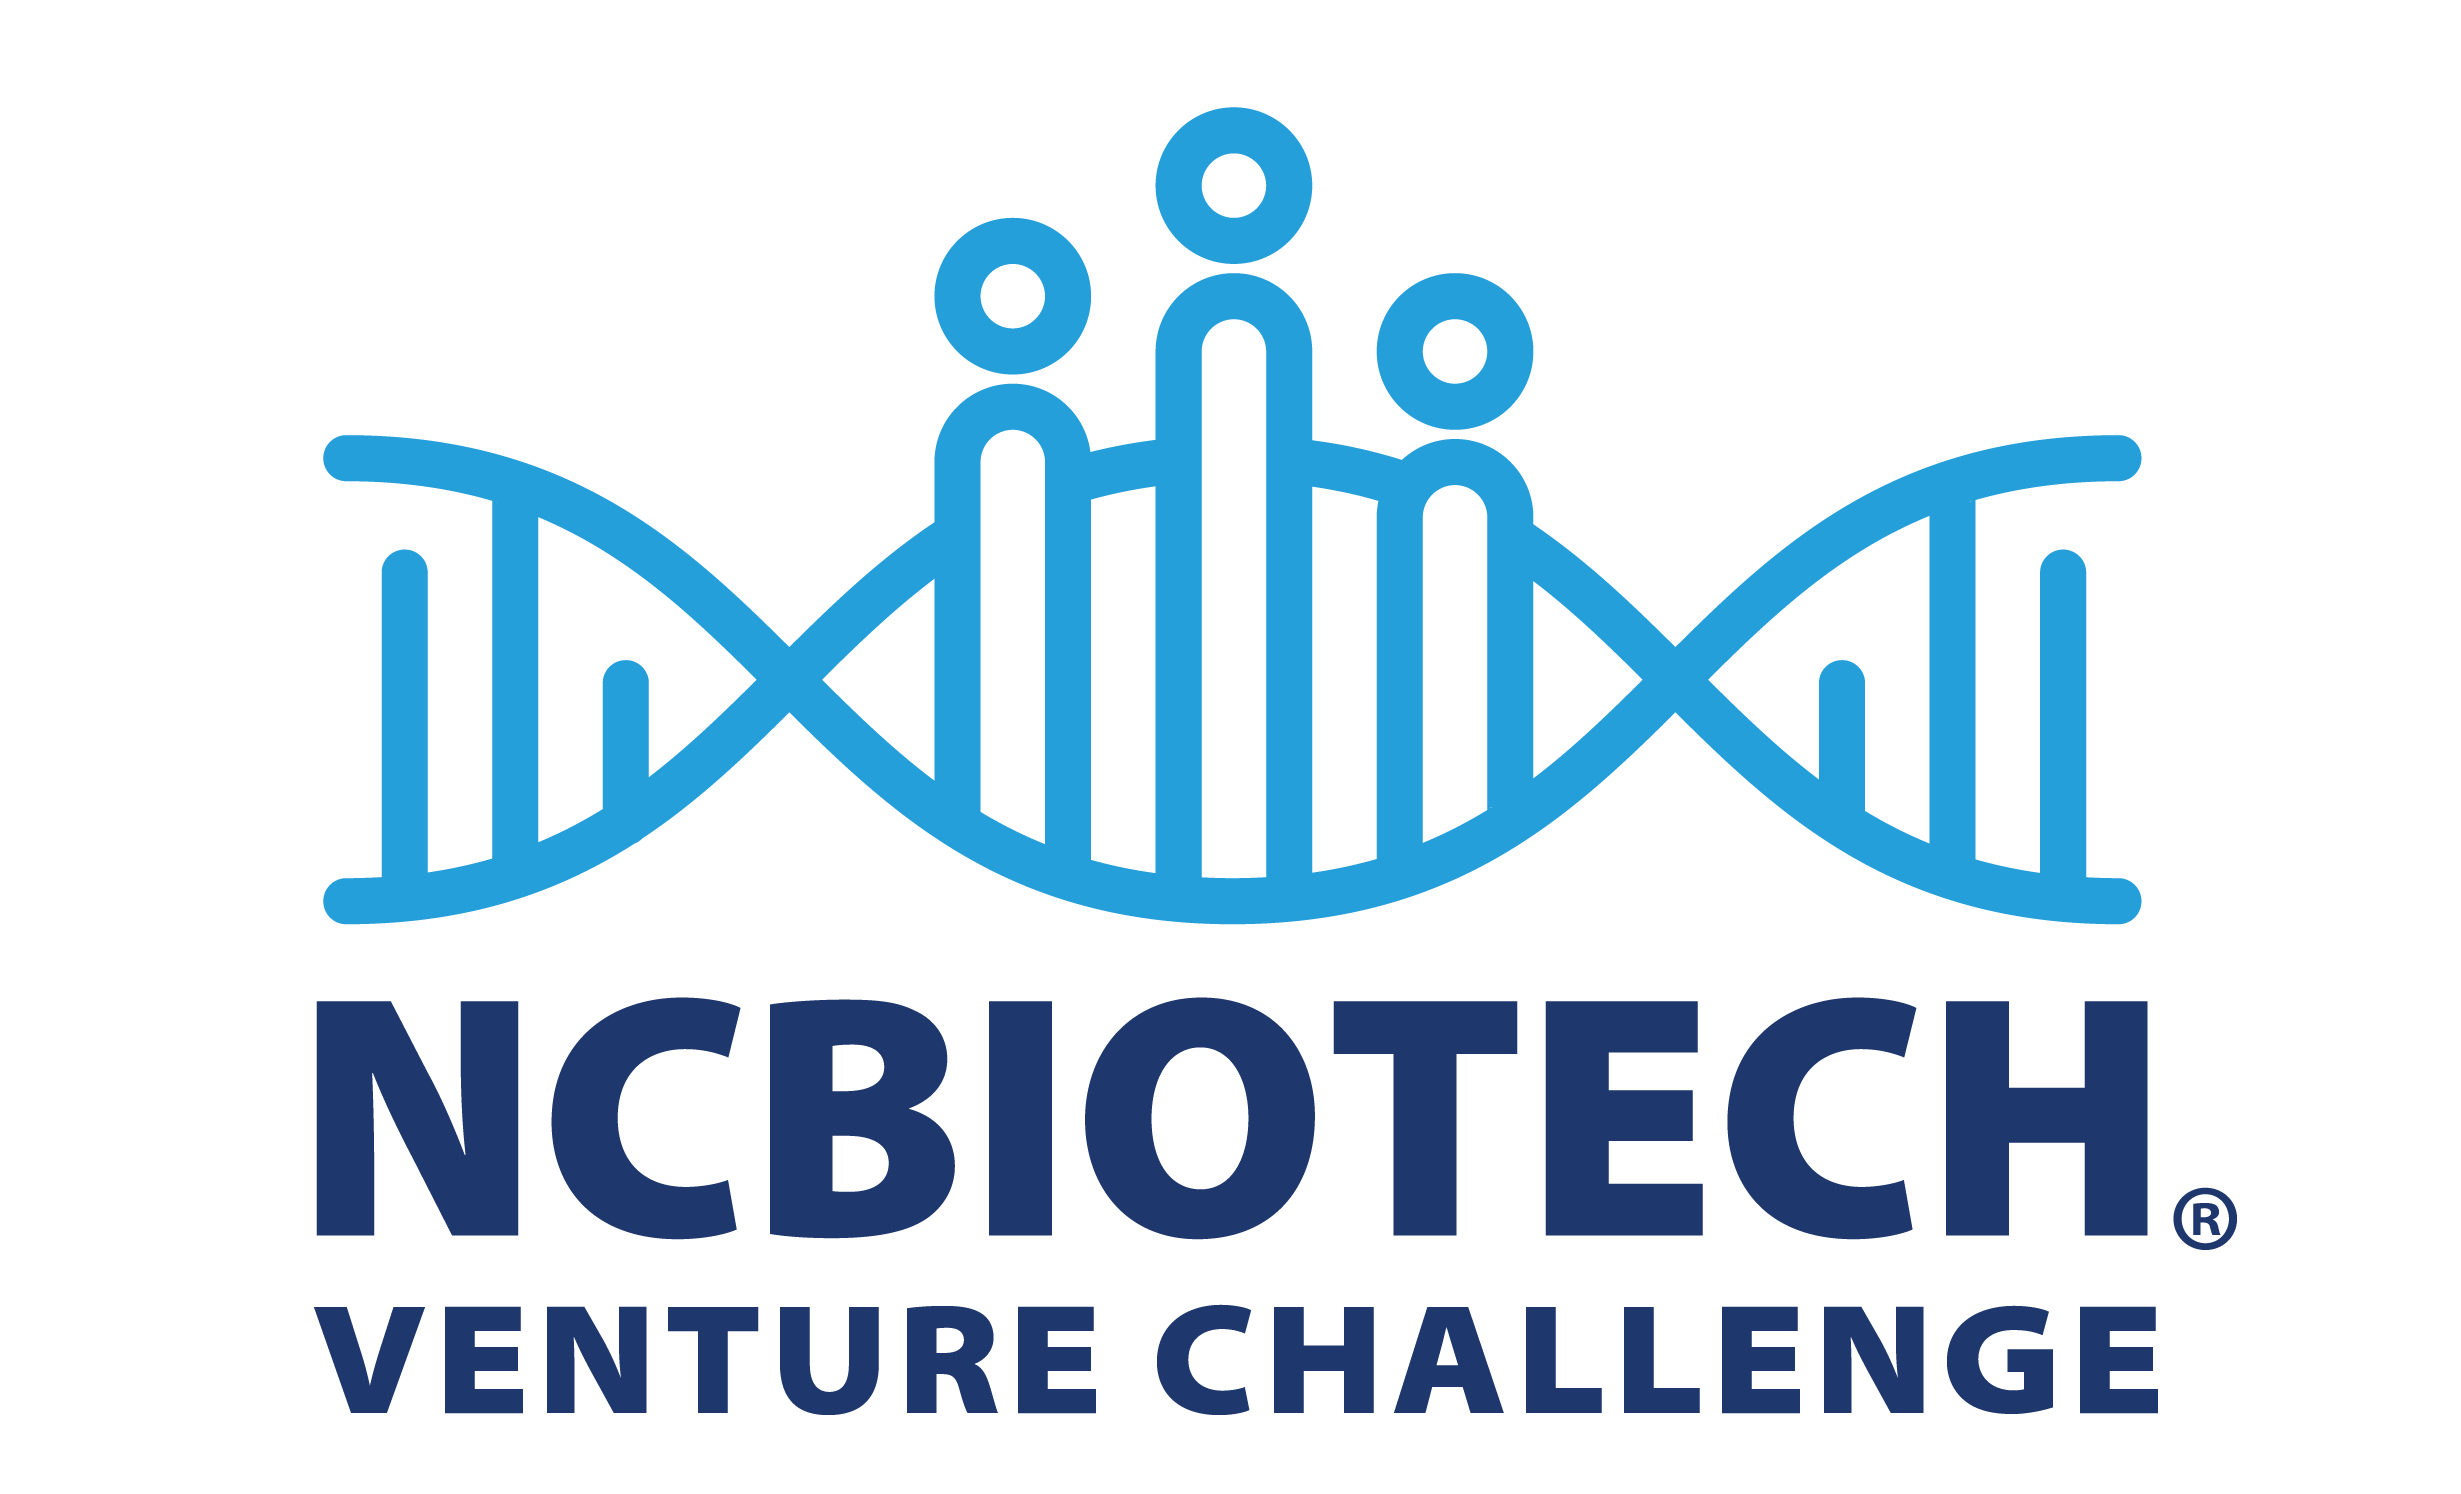 NCBiotech Venture Challenge logo